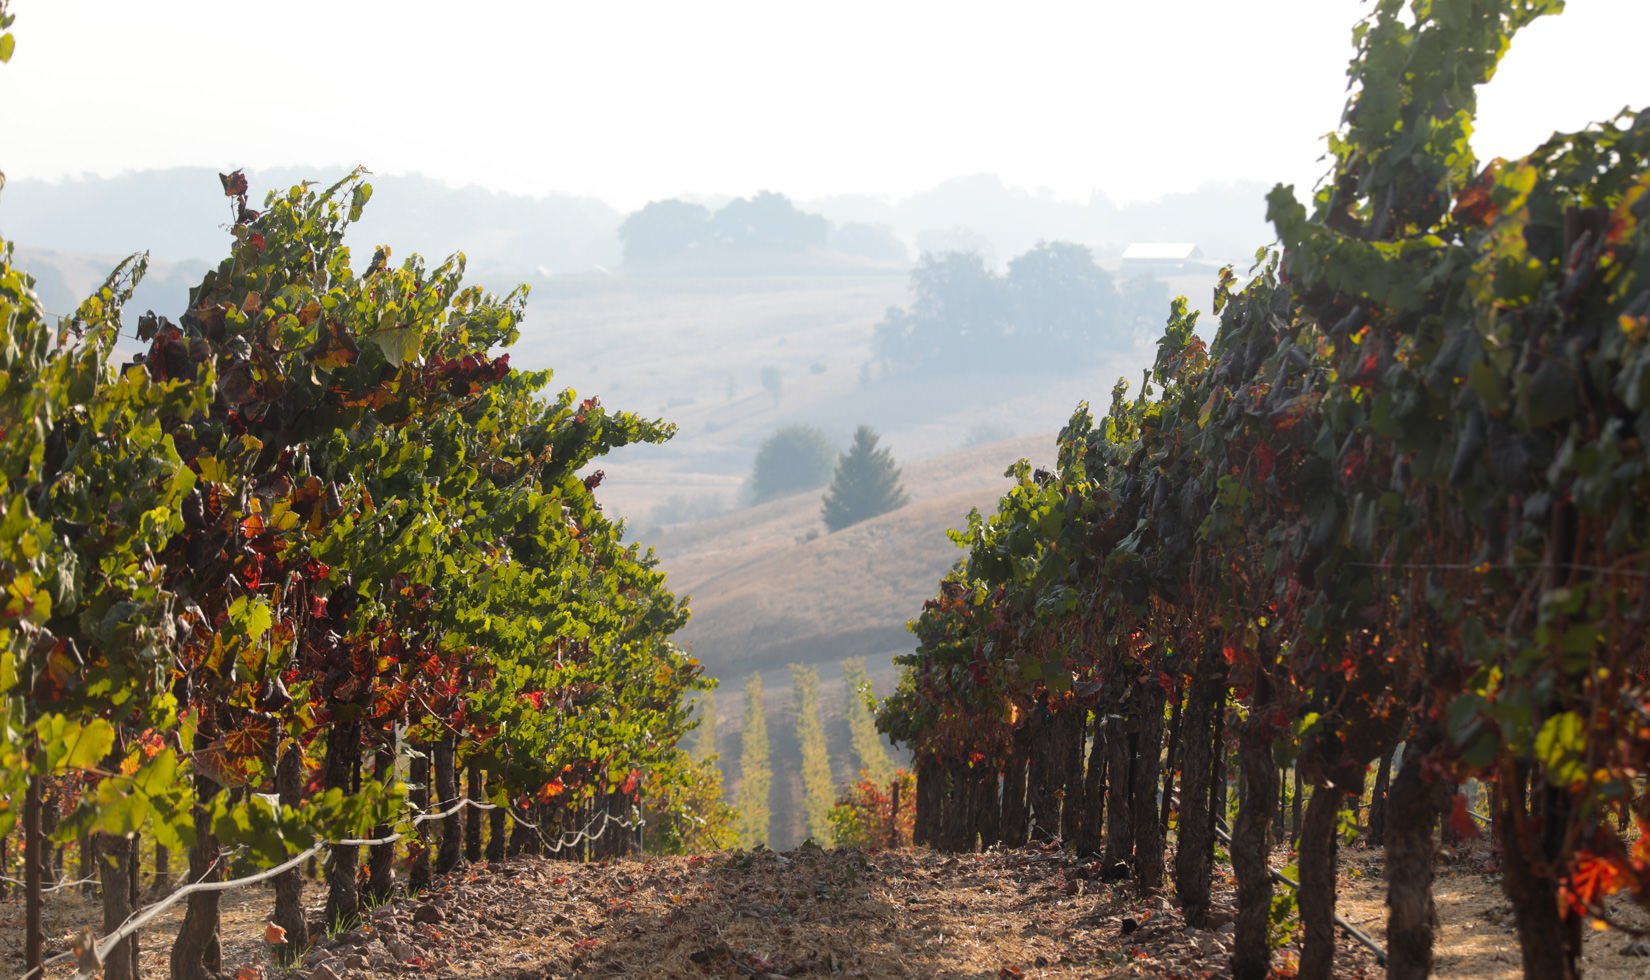 Jordan Winery vineyards, smoke, wine country wildfires